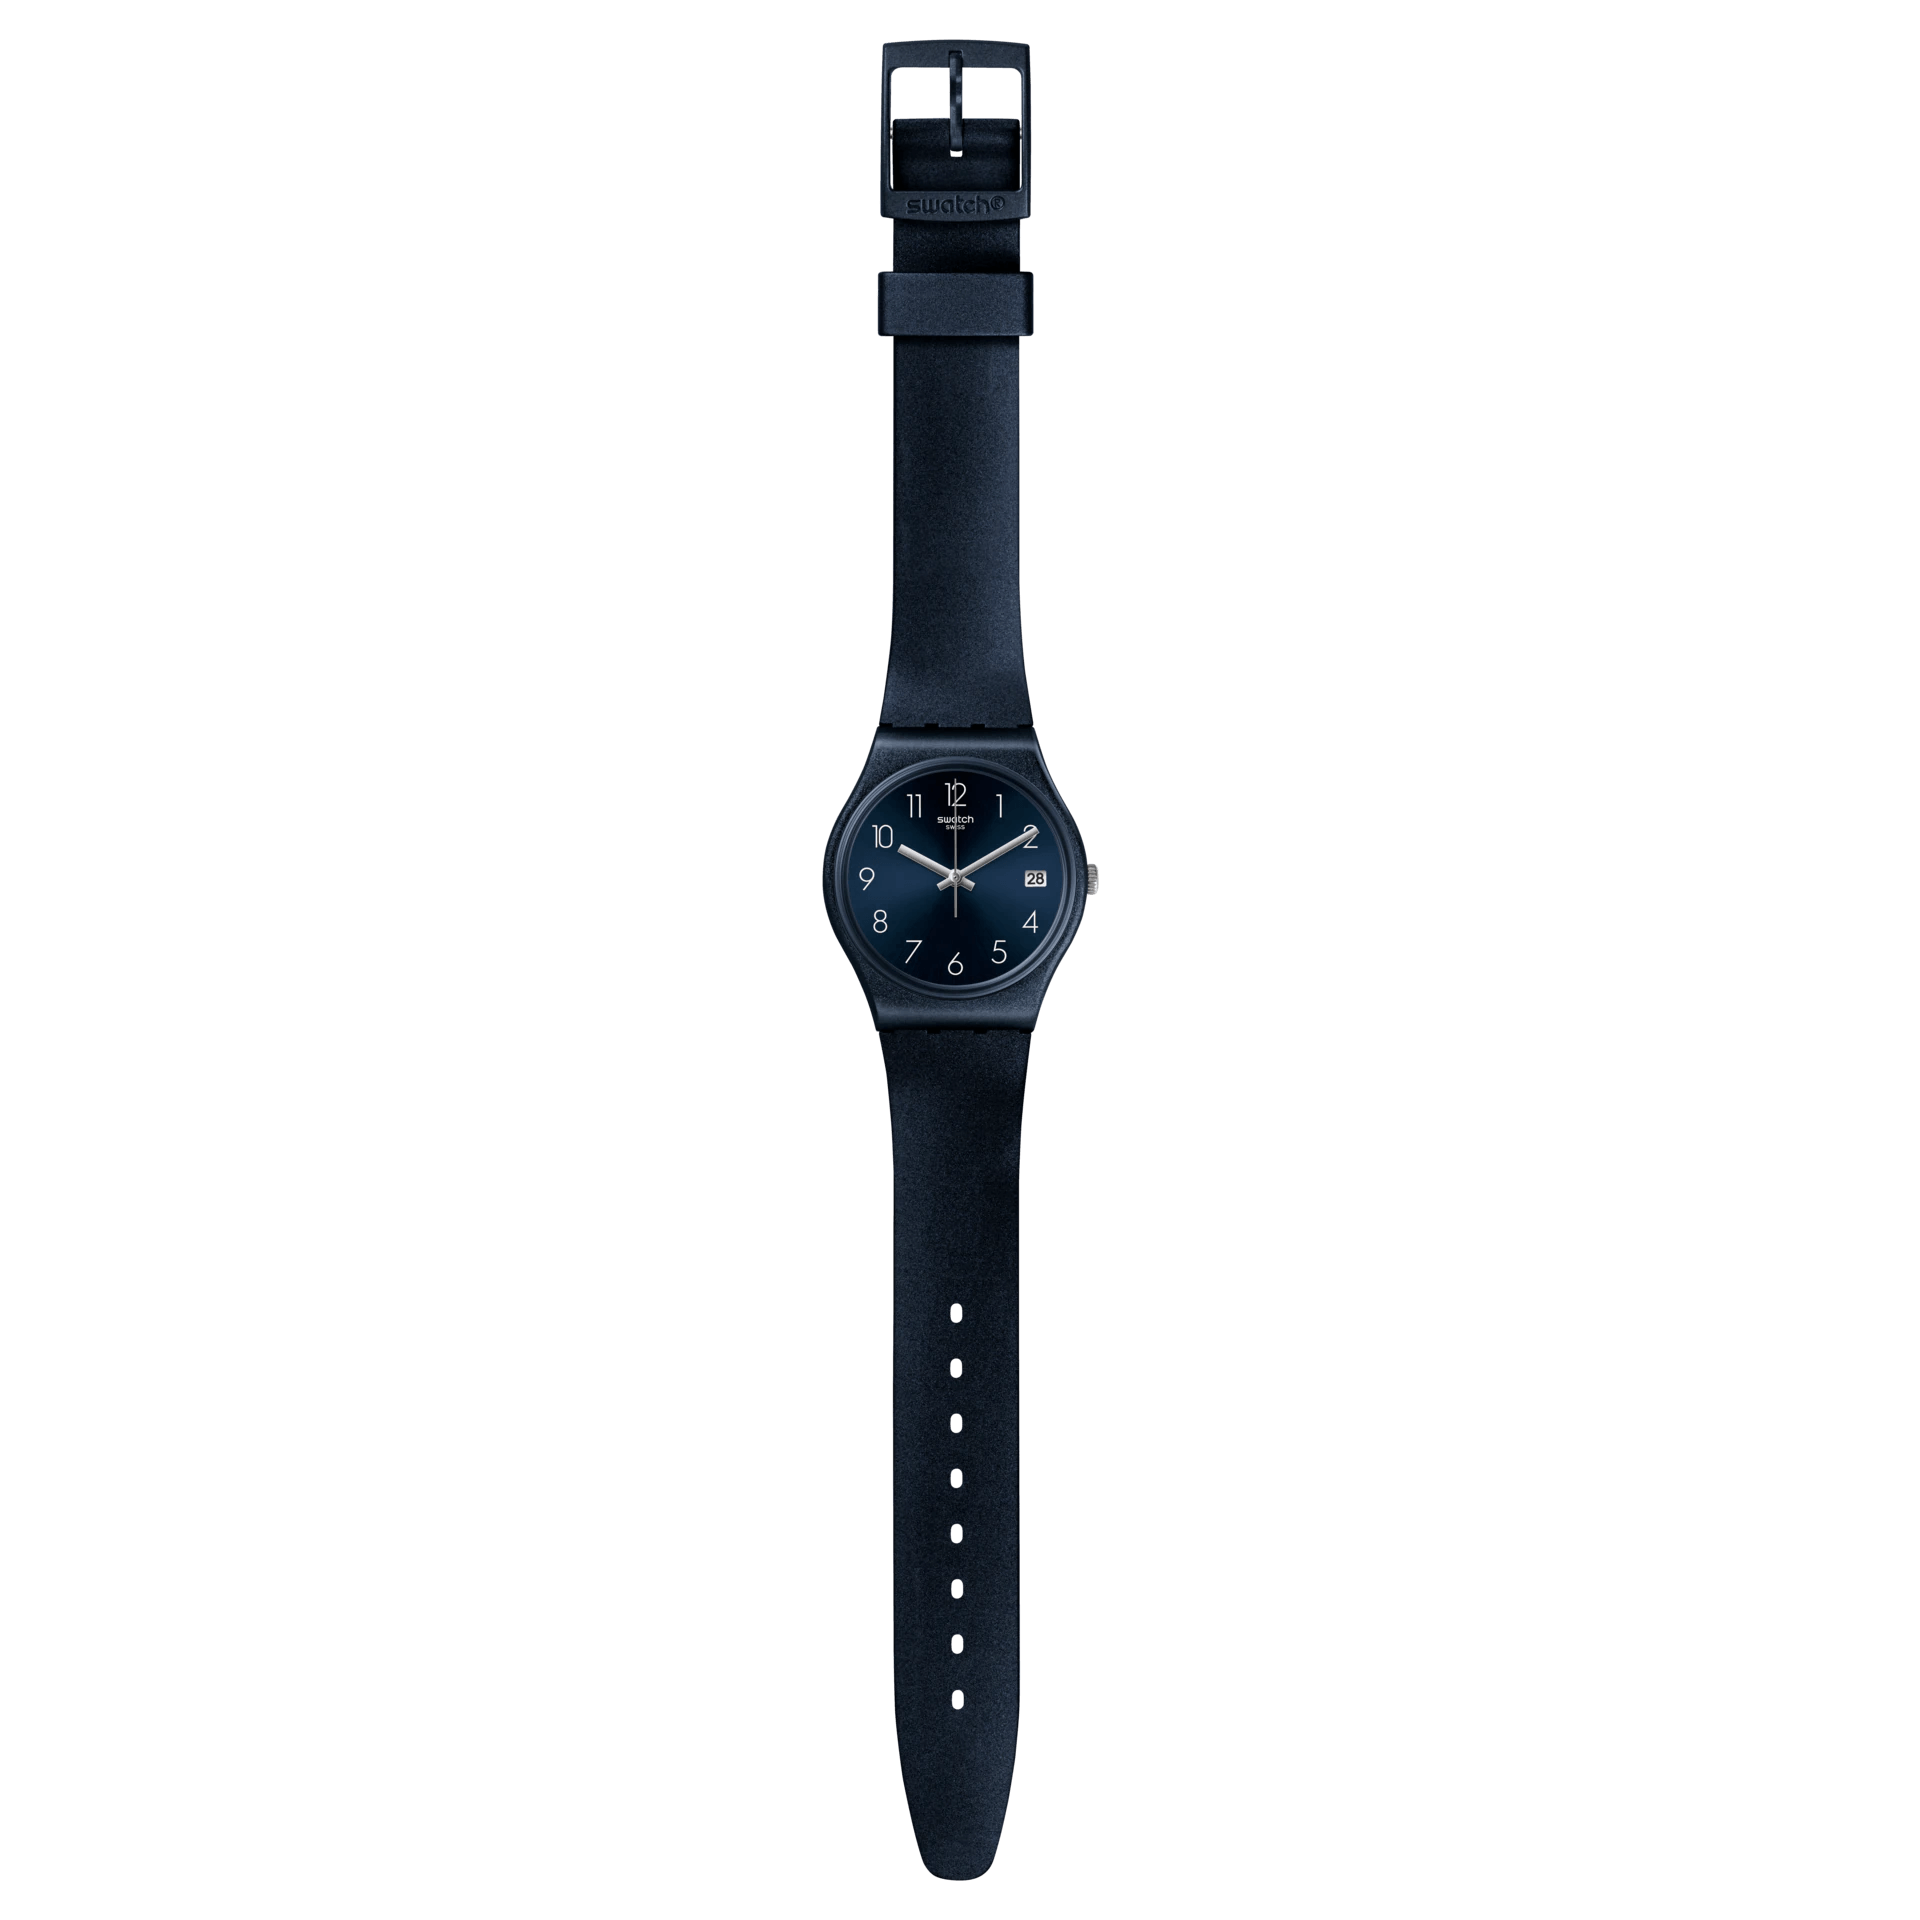 Orologio da donna Swatch - NAITBAYA - GN414 - Simmi Gioiellerie -Orologi